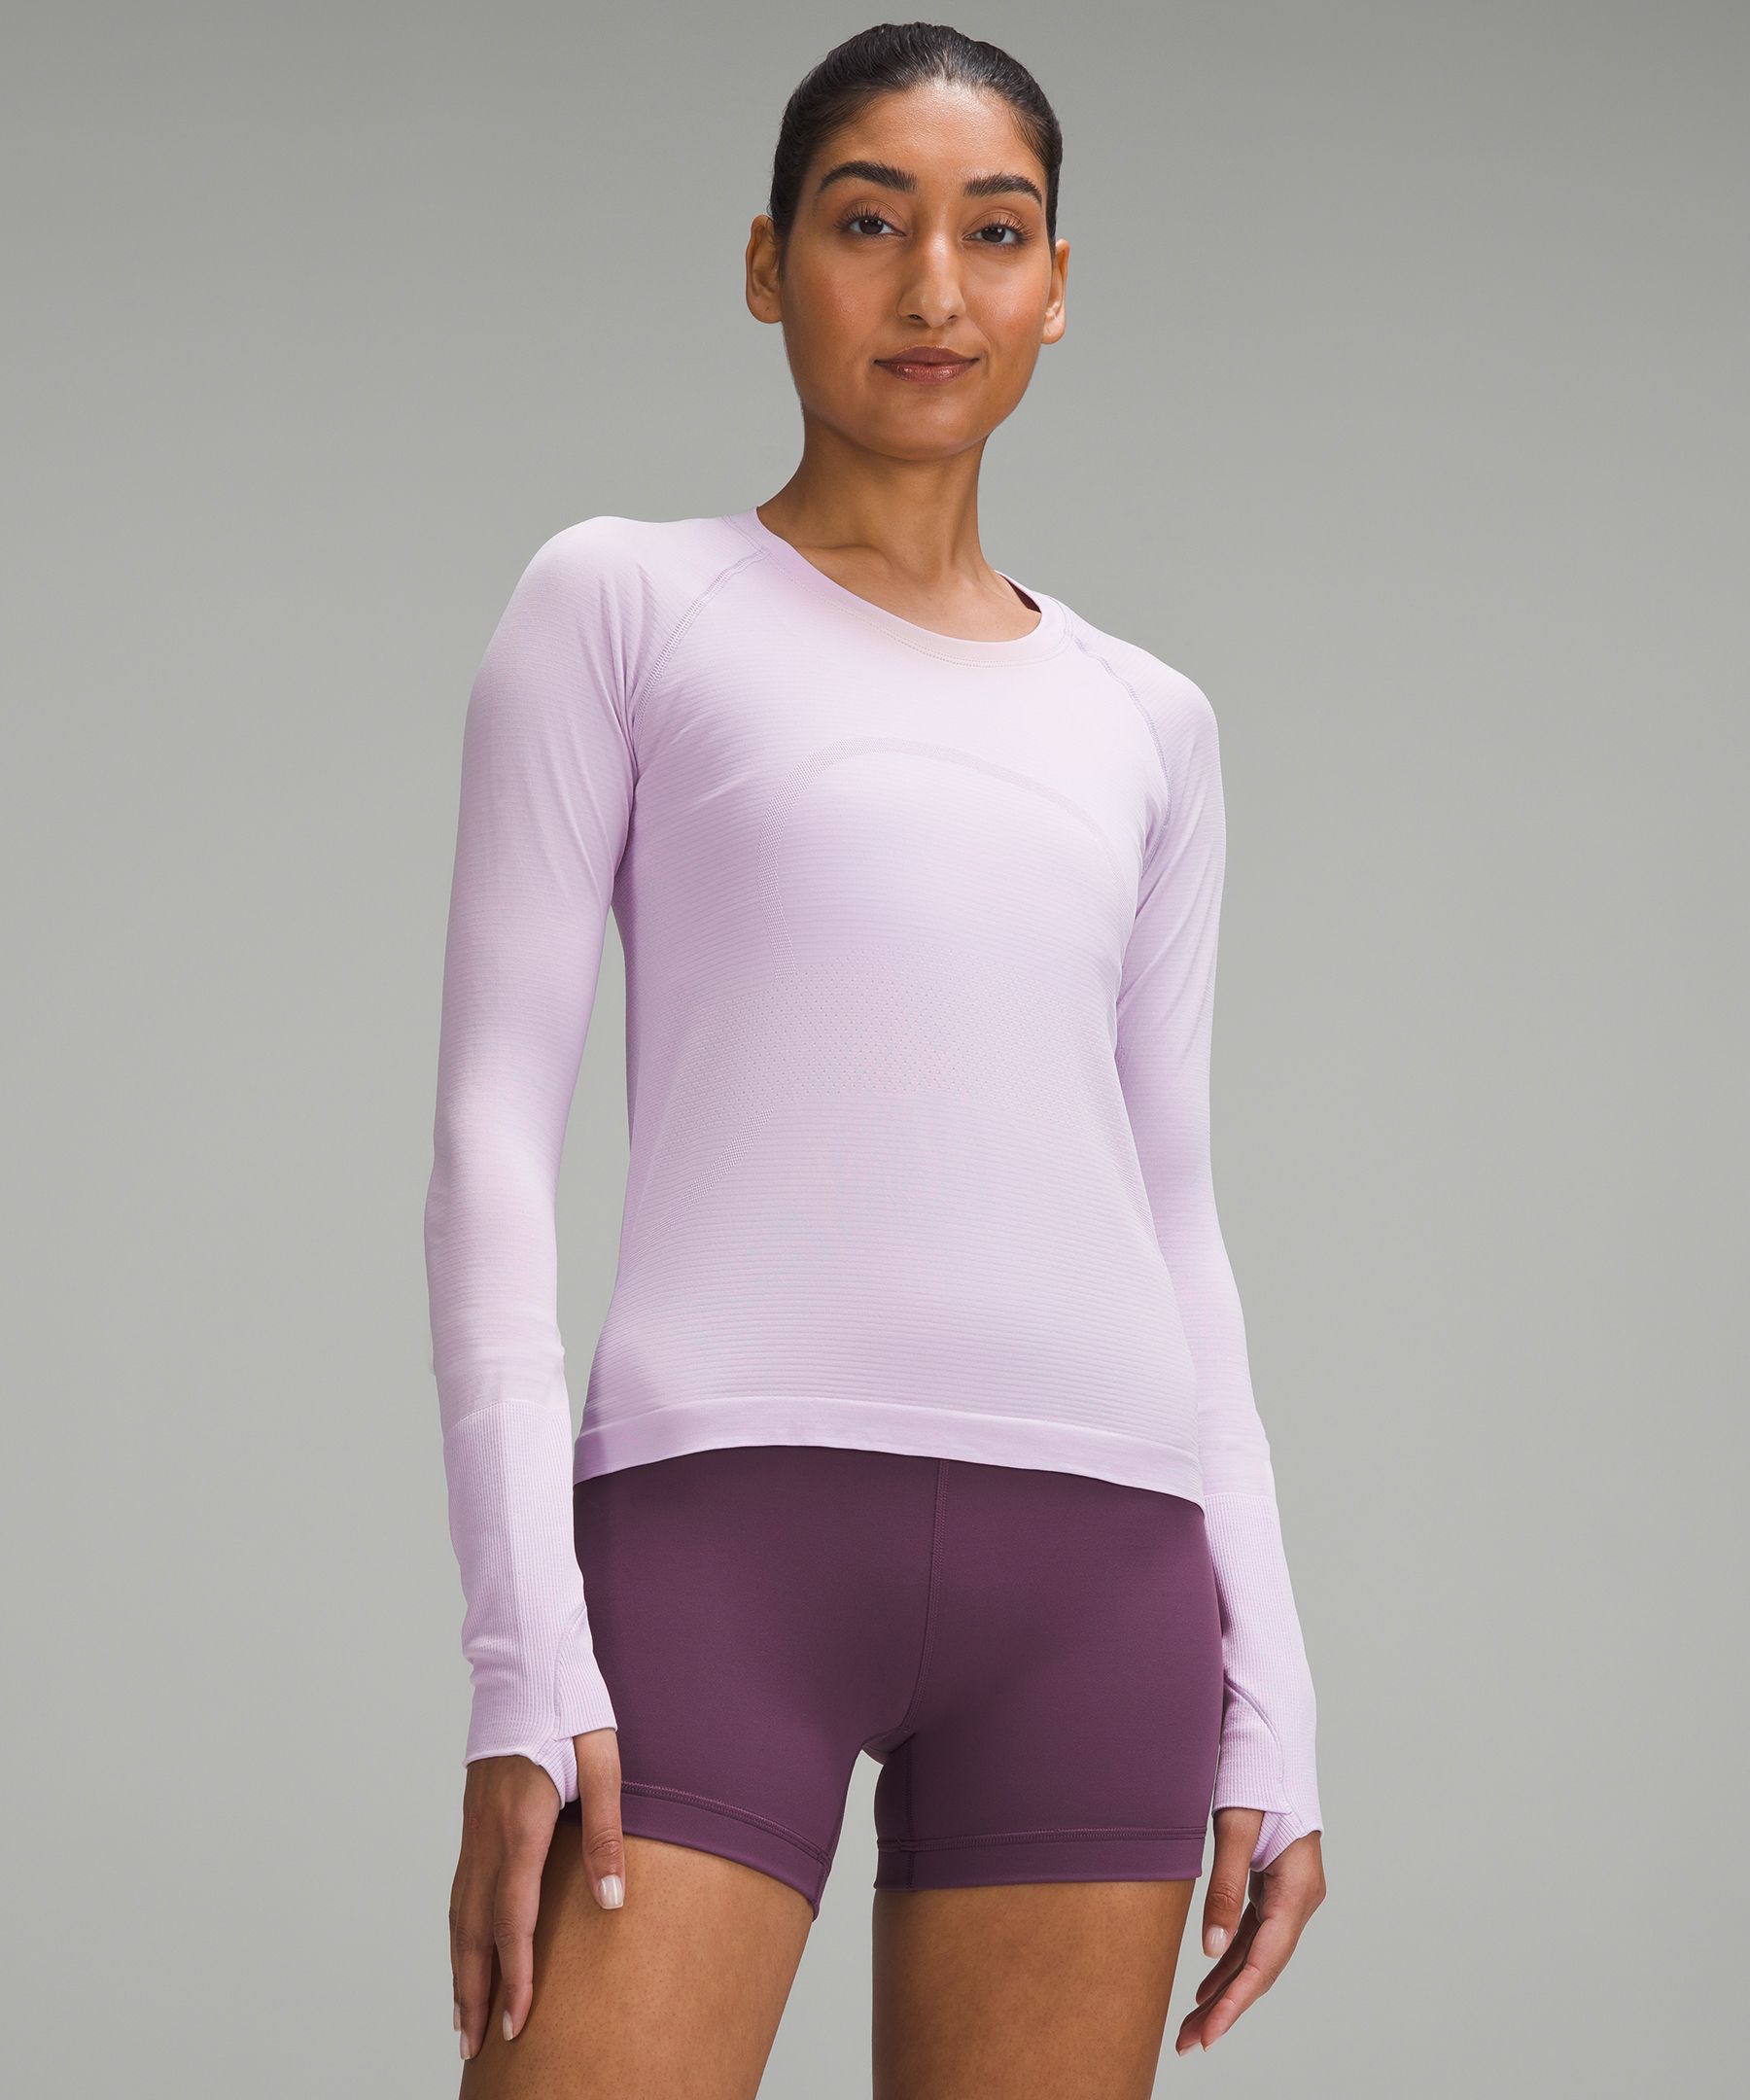 Lululemon Women's Purple Long Sleeve Pockets Activewear Pullover